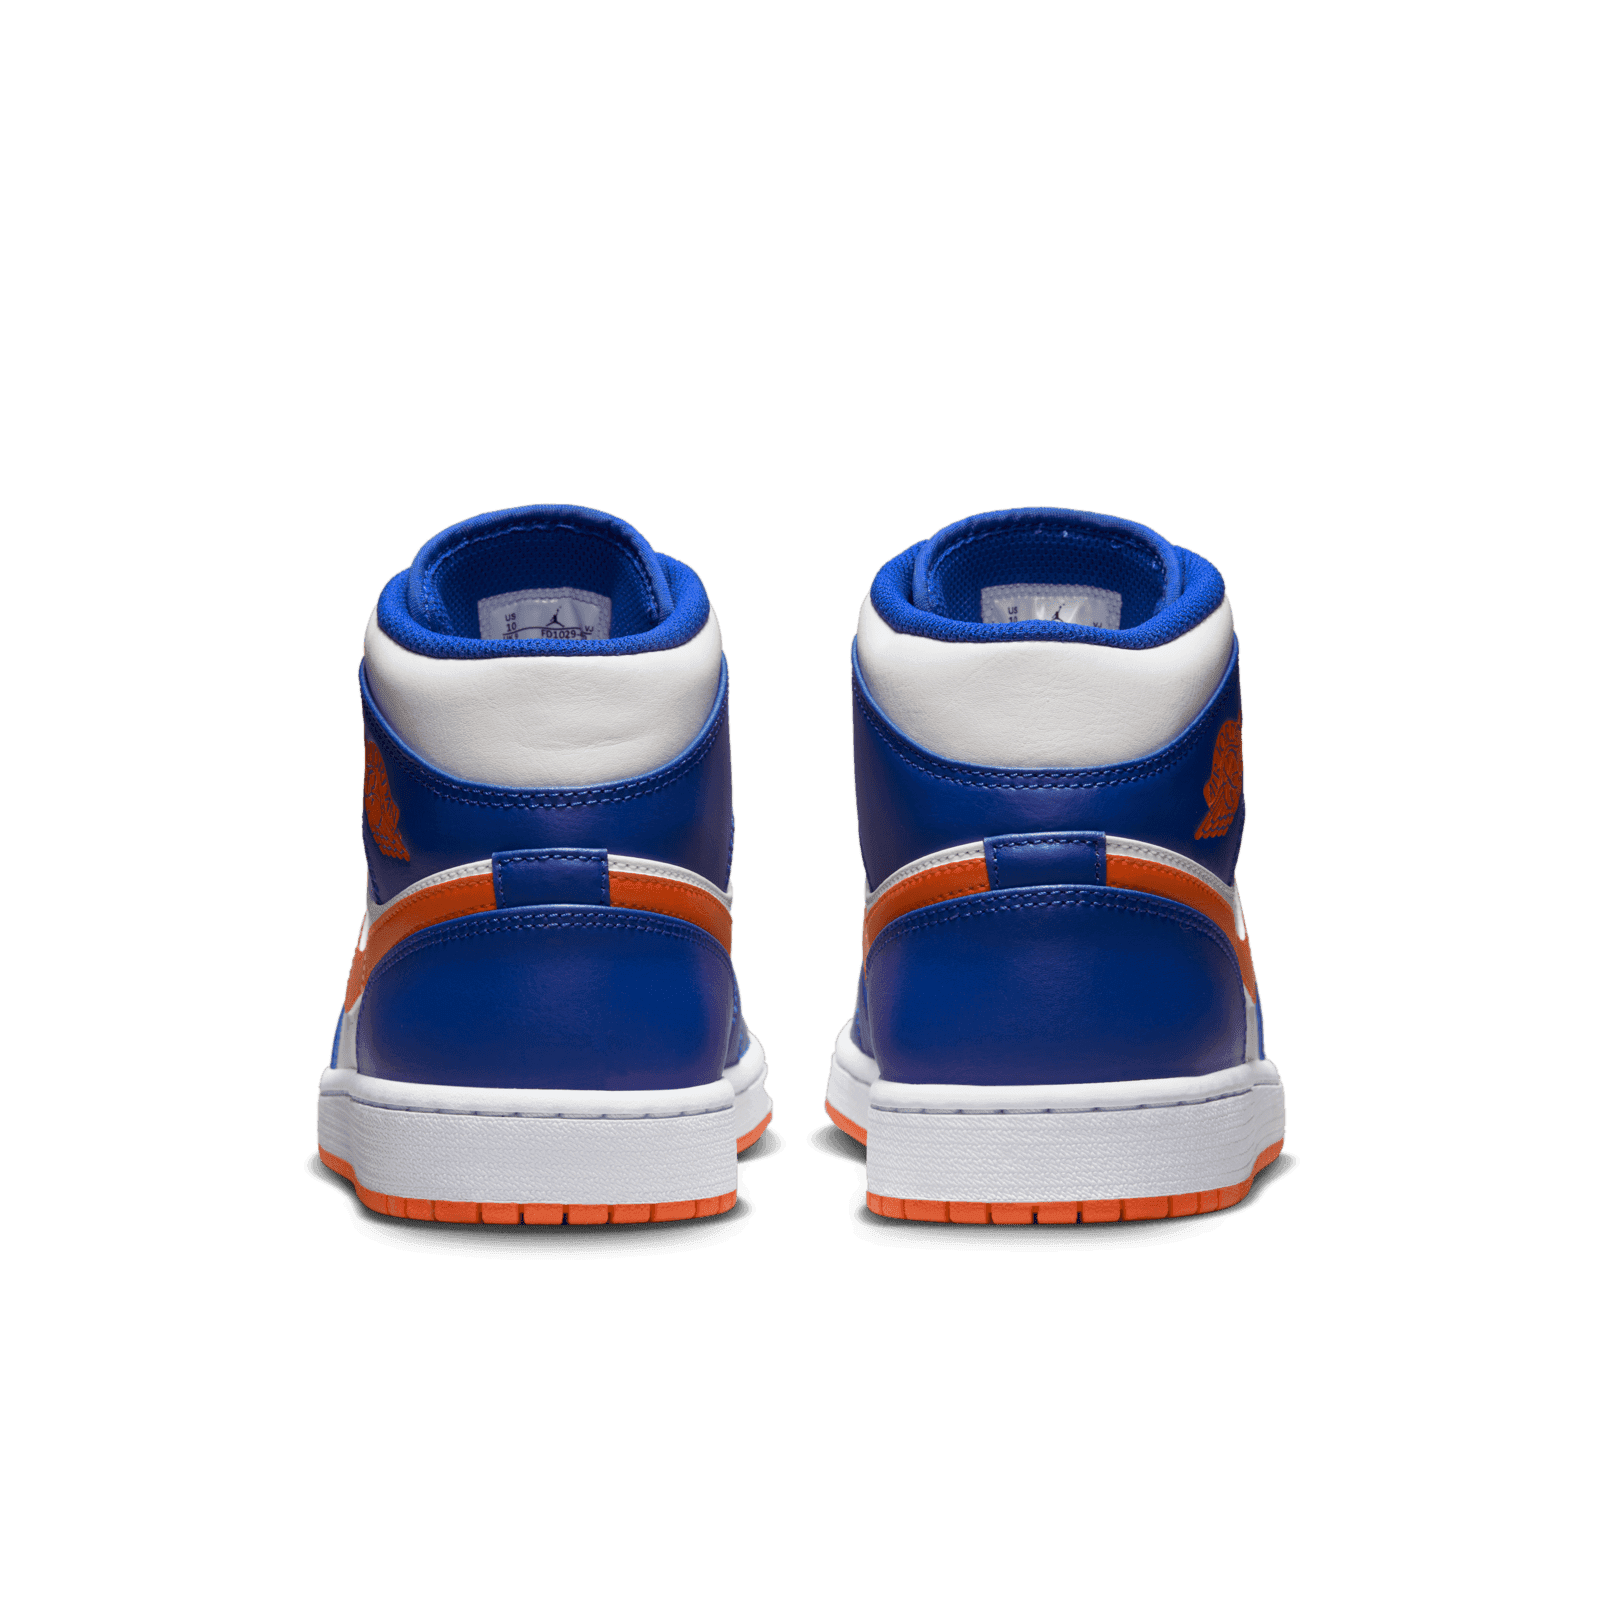 Air Jordan 1 Mid Knicks - FD1029-400 Raffles and Release Date